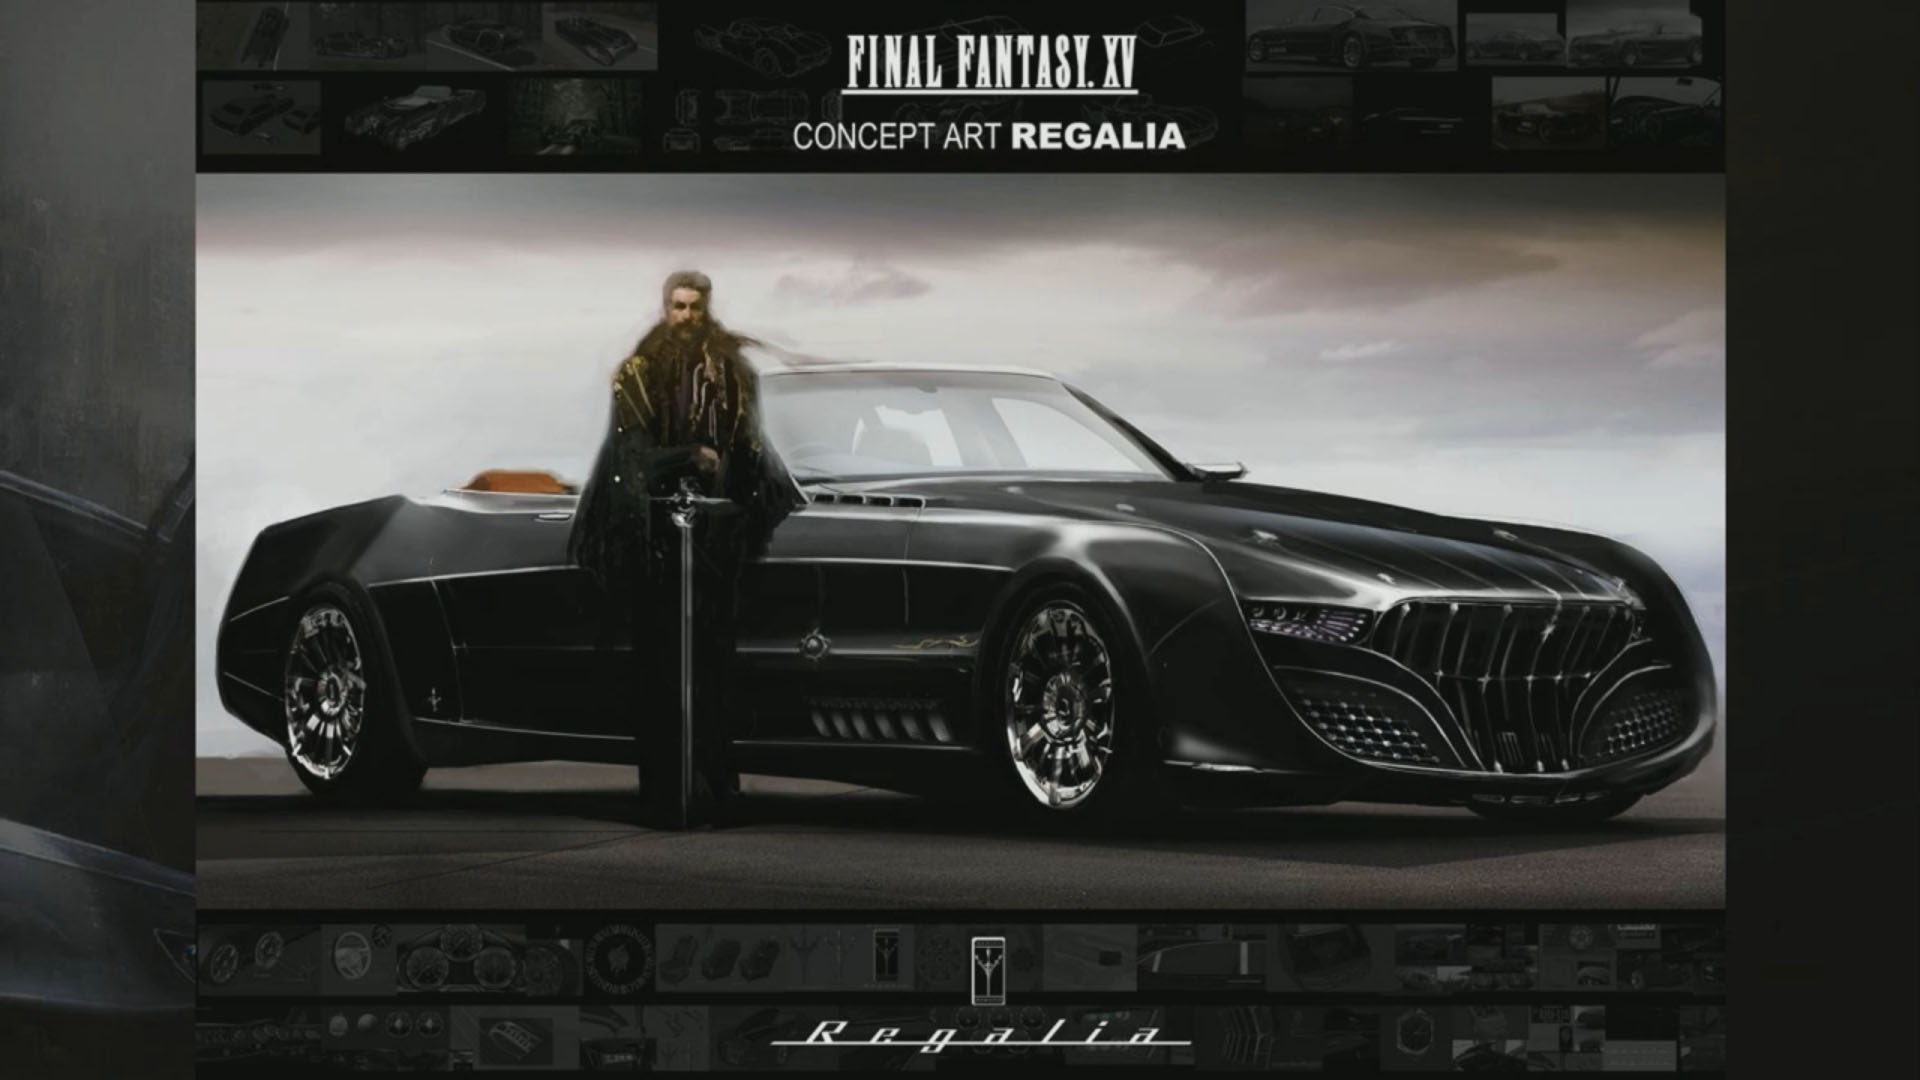 final fantasy xv king regis regalia car concept art pax 2015